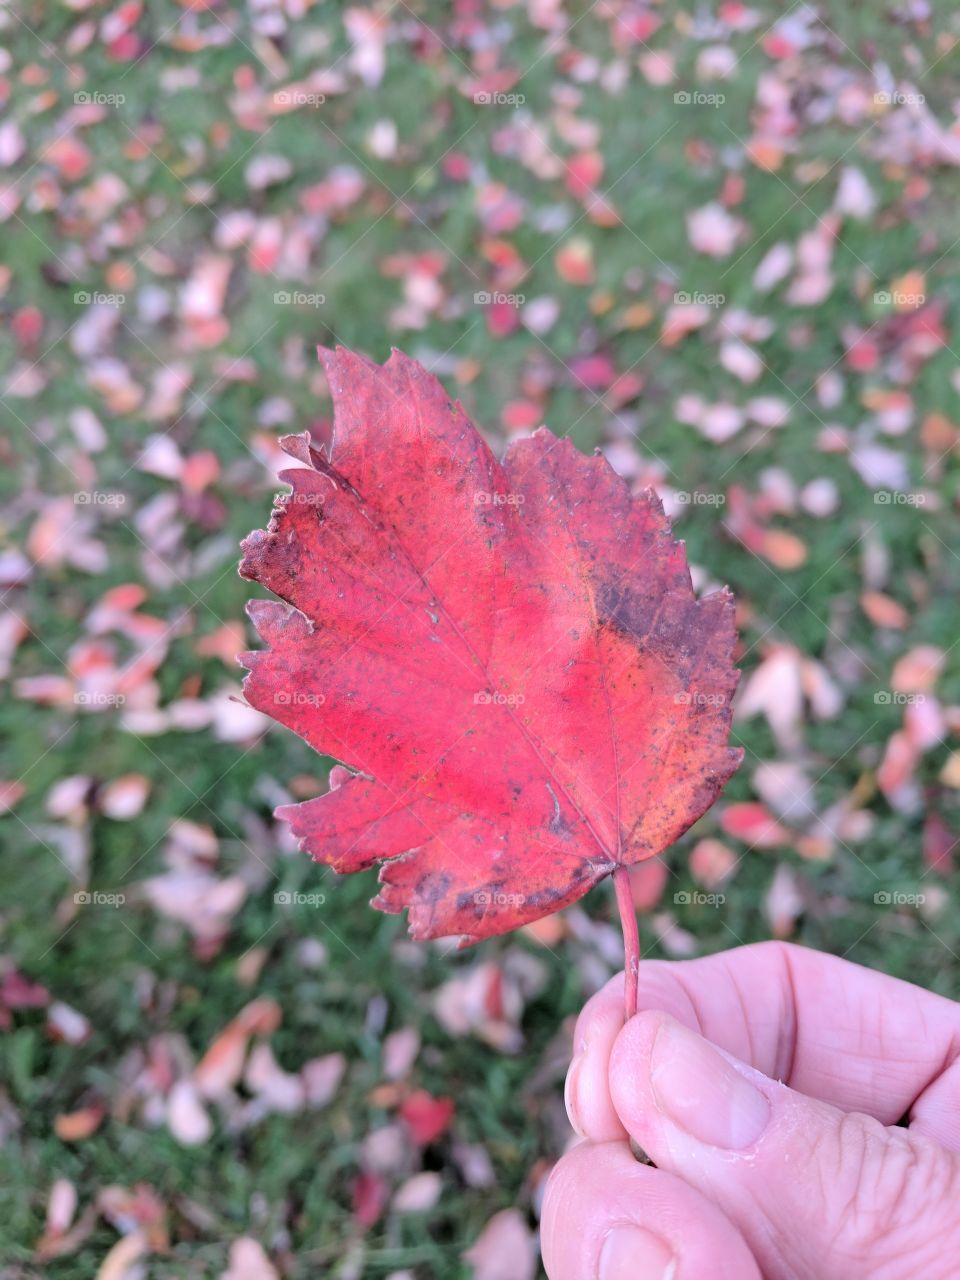 red fall leaf